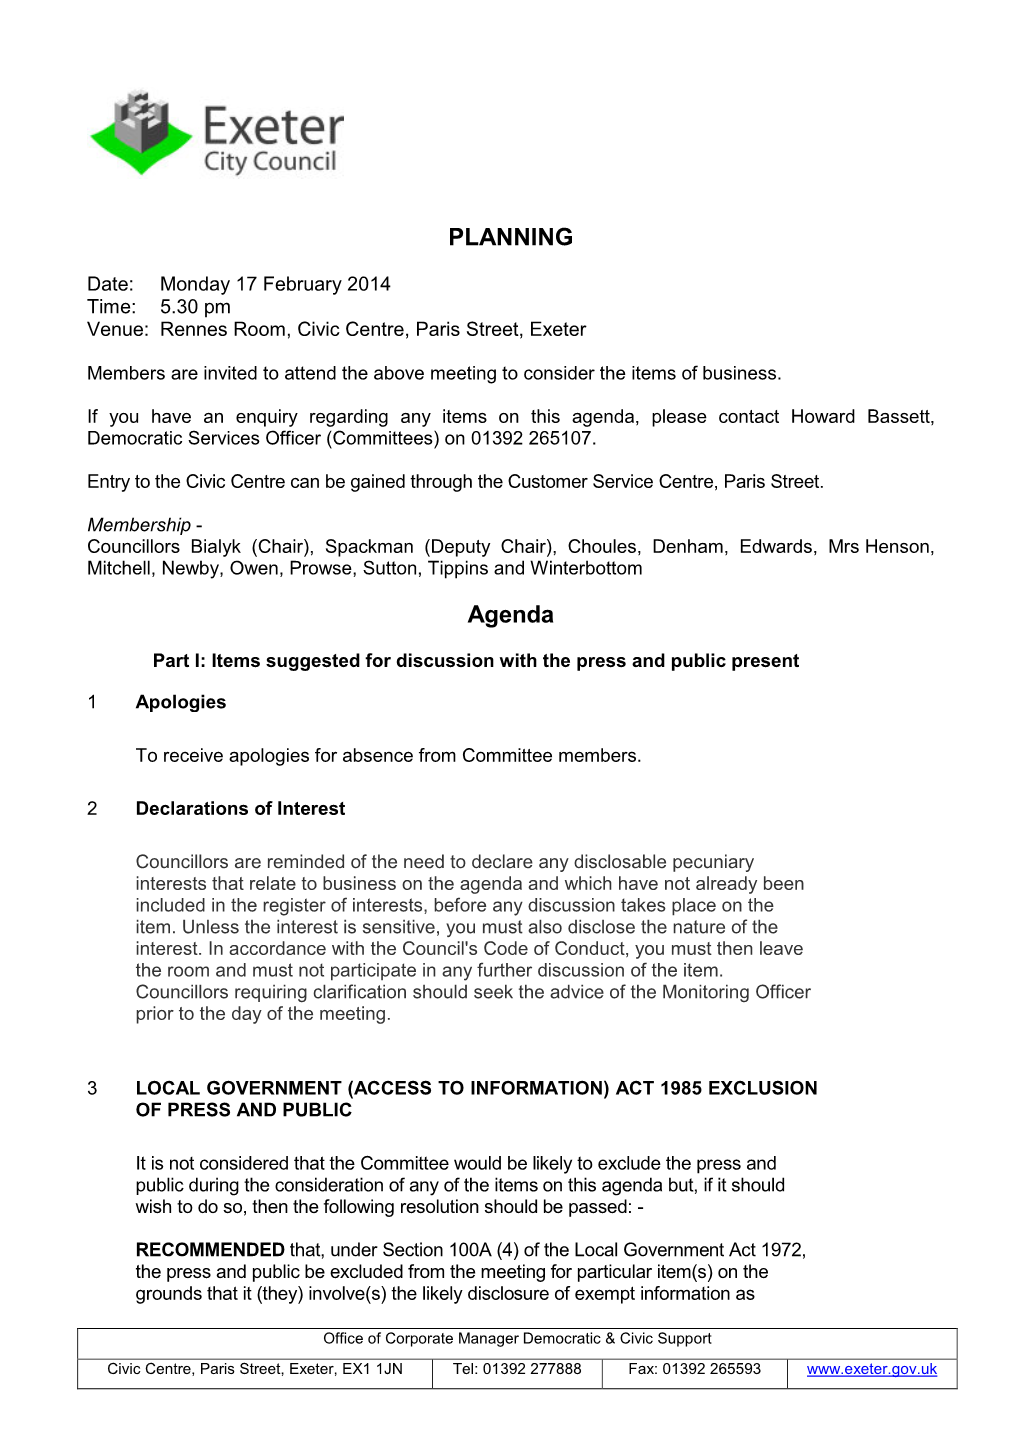 Agenda Reports Pack (Public) 17/02/2014, 17.30